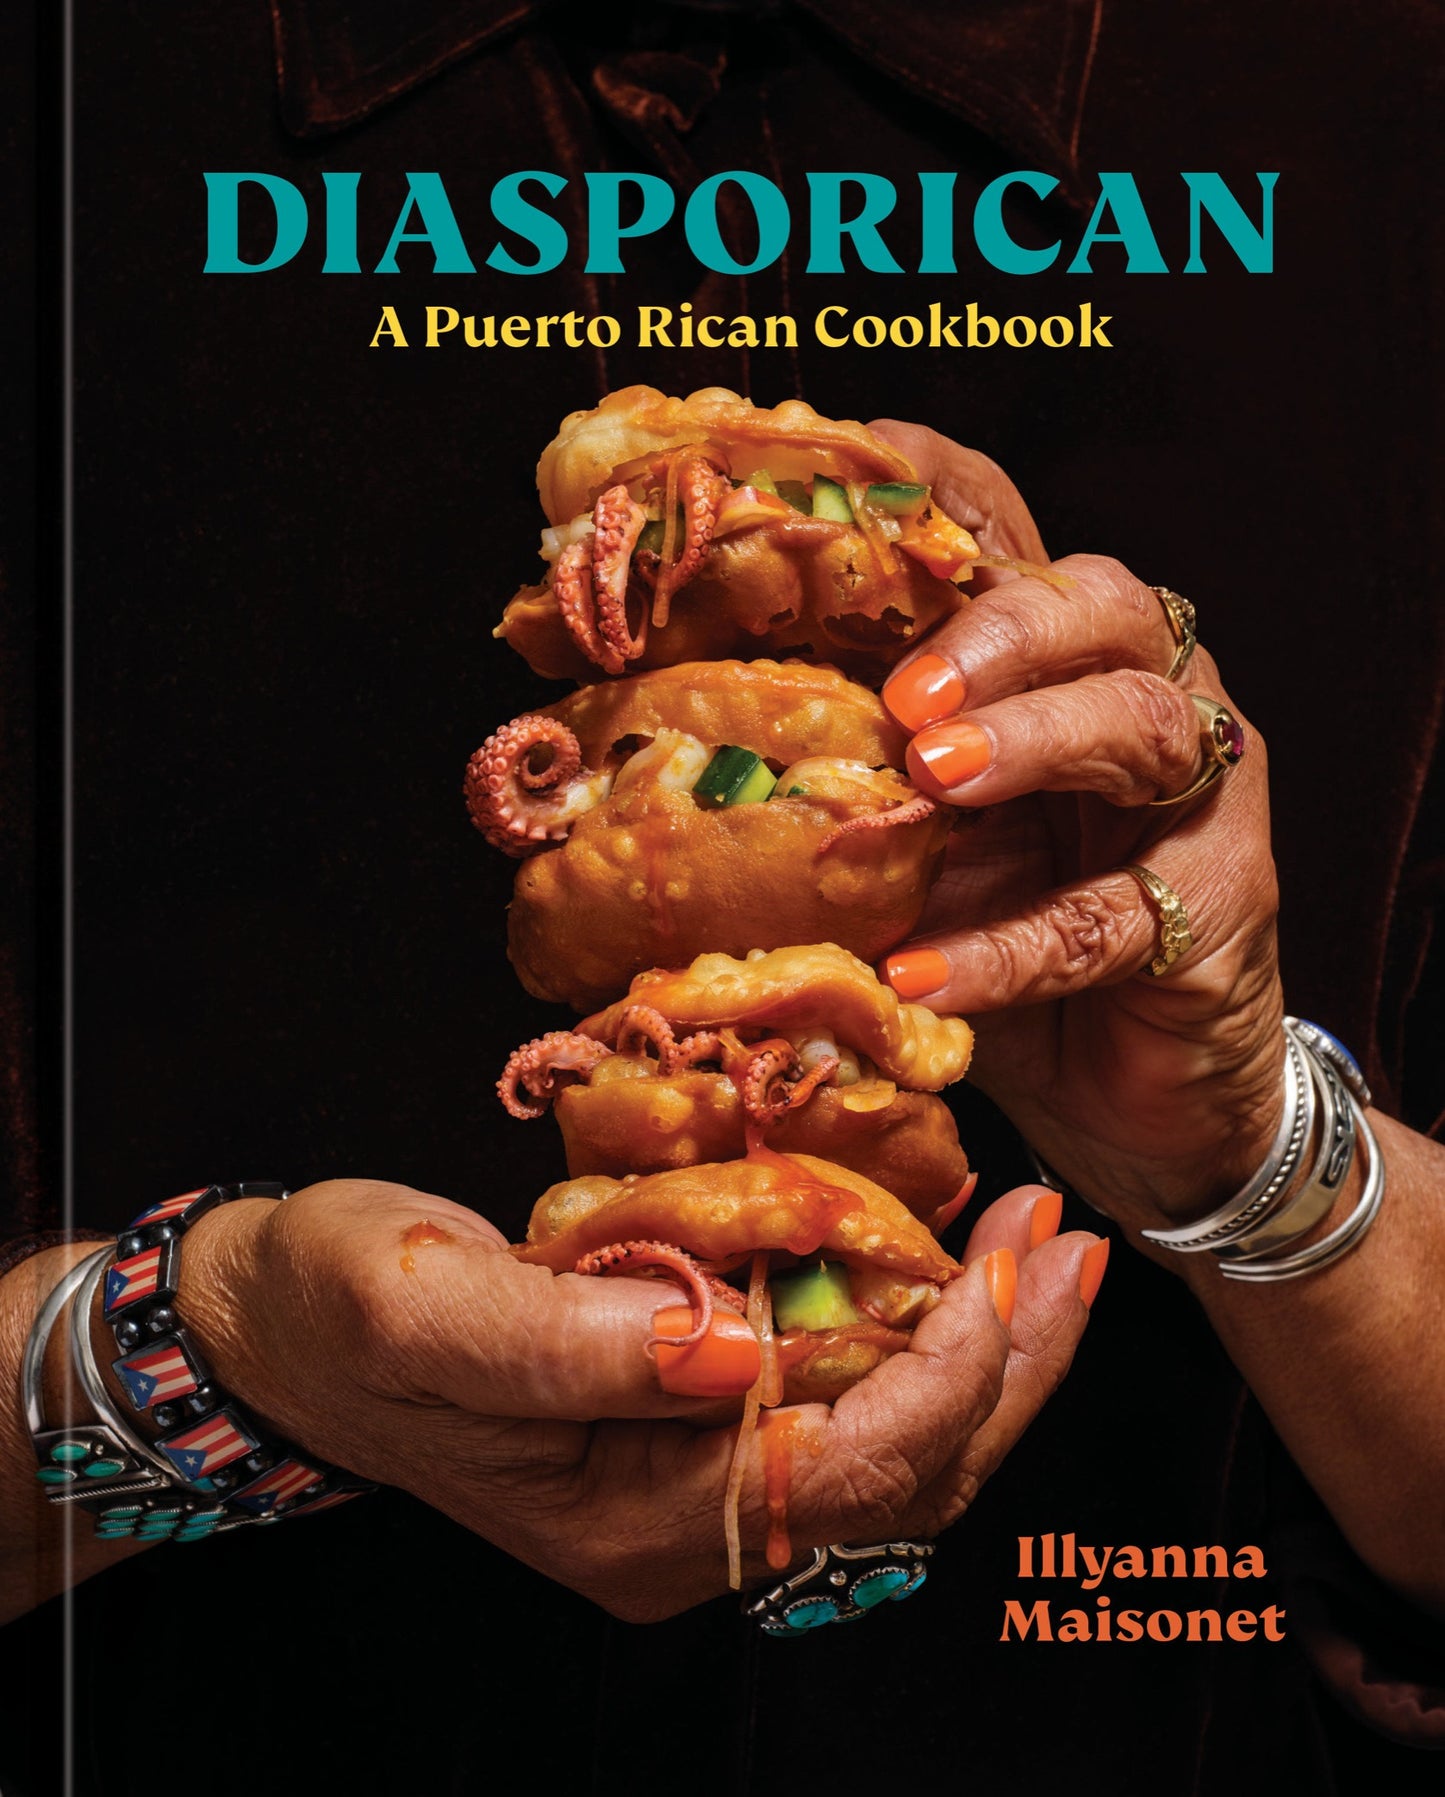 Diasporican // A Puerto Rican Cookbook